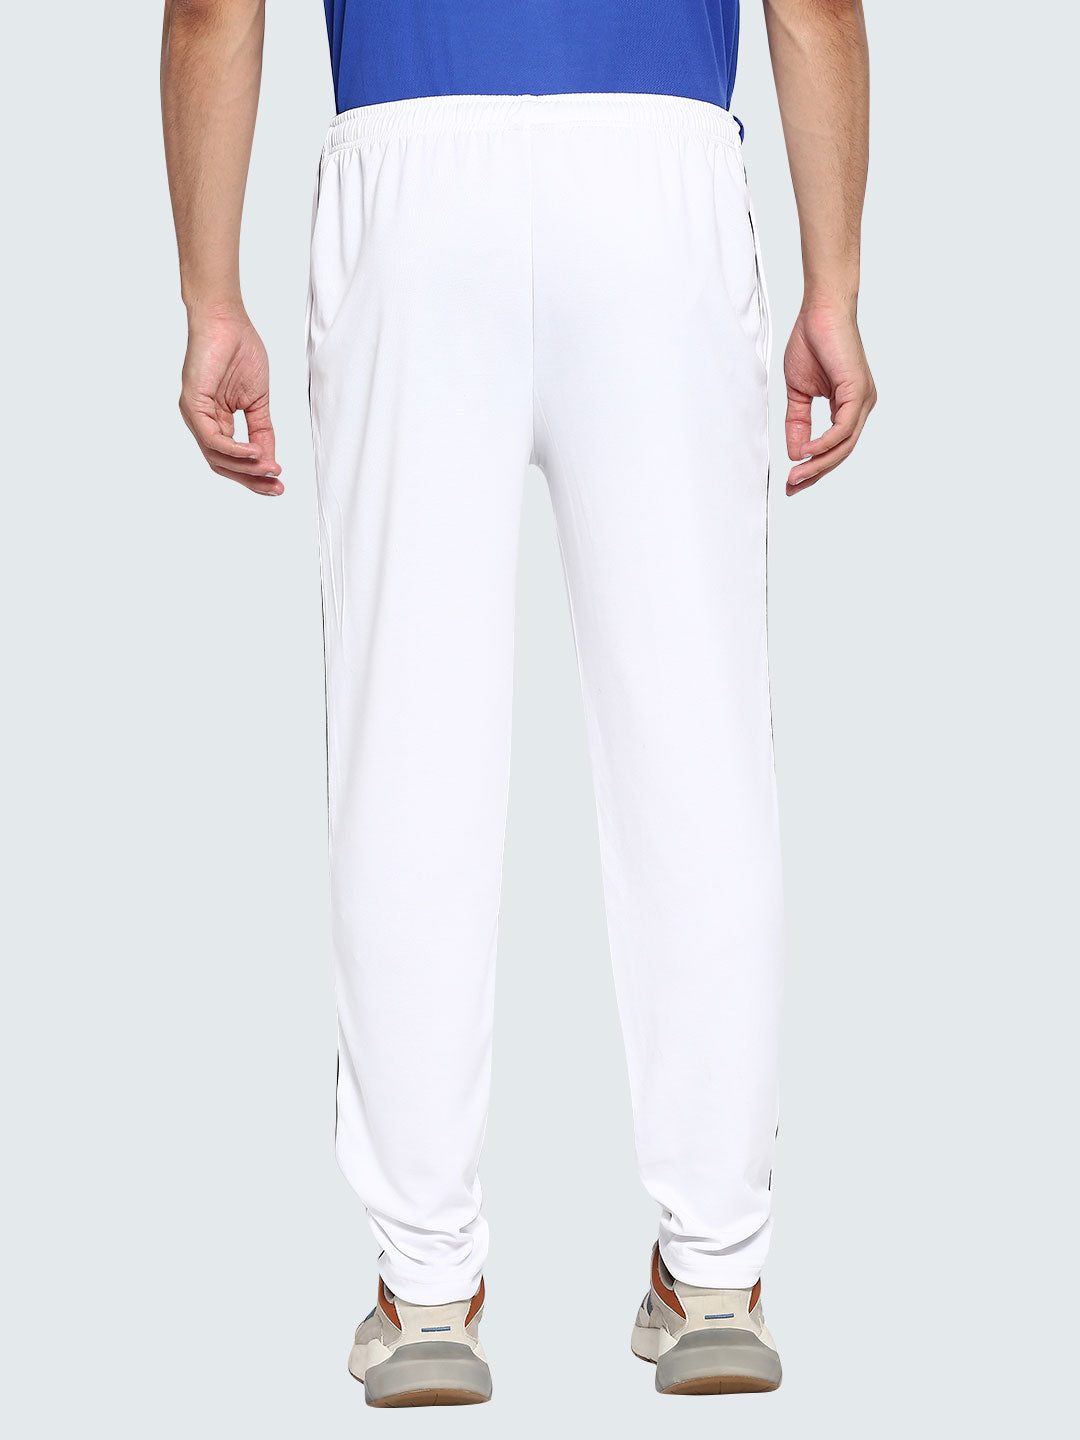 Joggers Sweatpants Men Casual Striped Pants Fashion Loose Track Pants Men  Sweat Pants Sports Japanese Streetwear